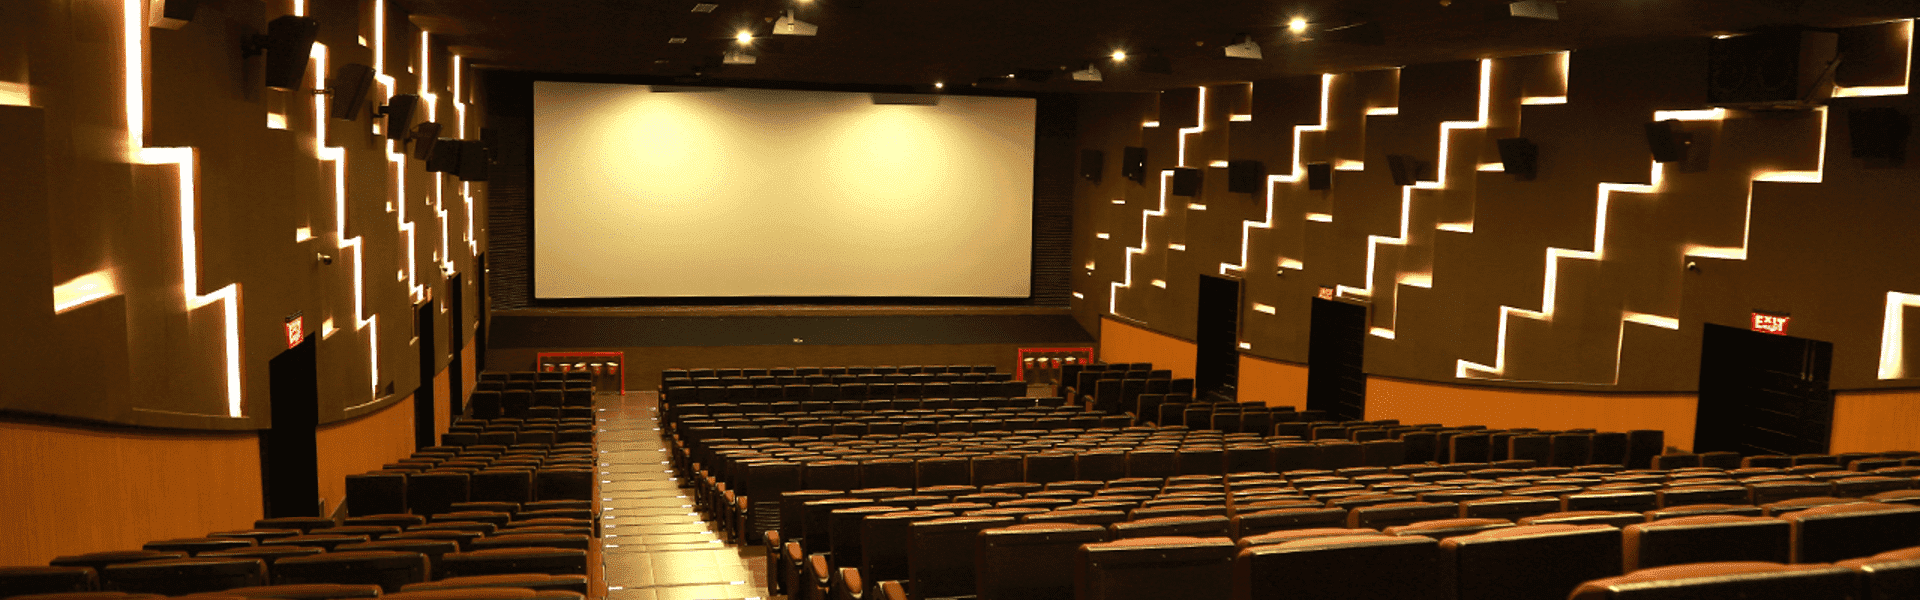 Cinema screen